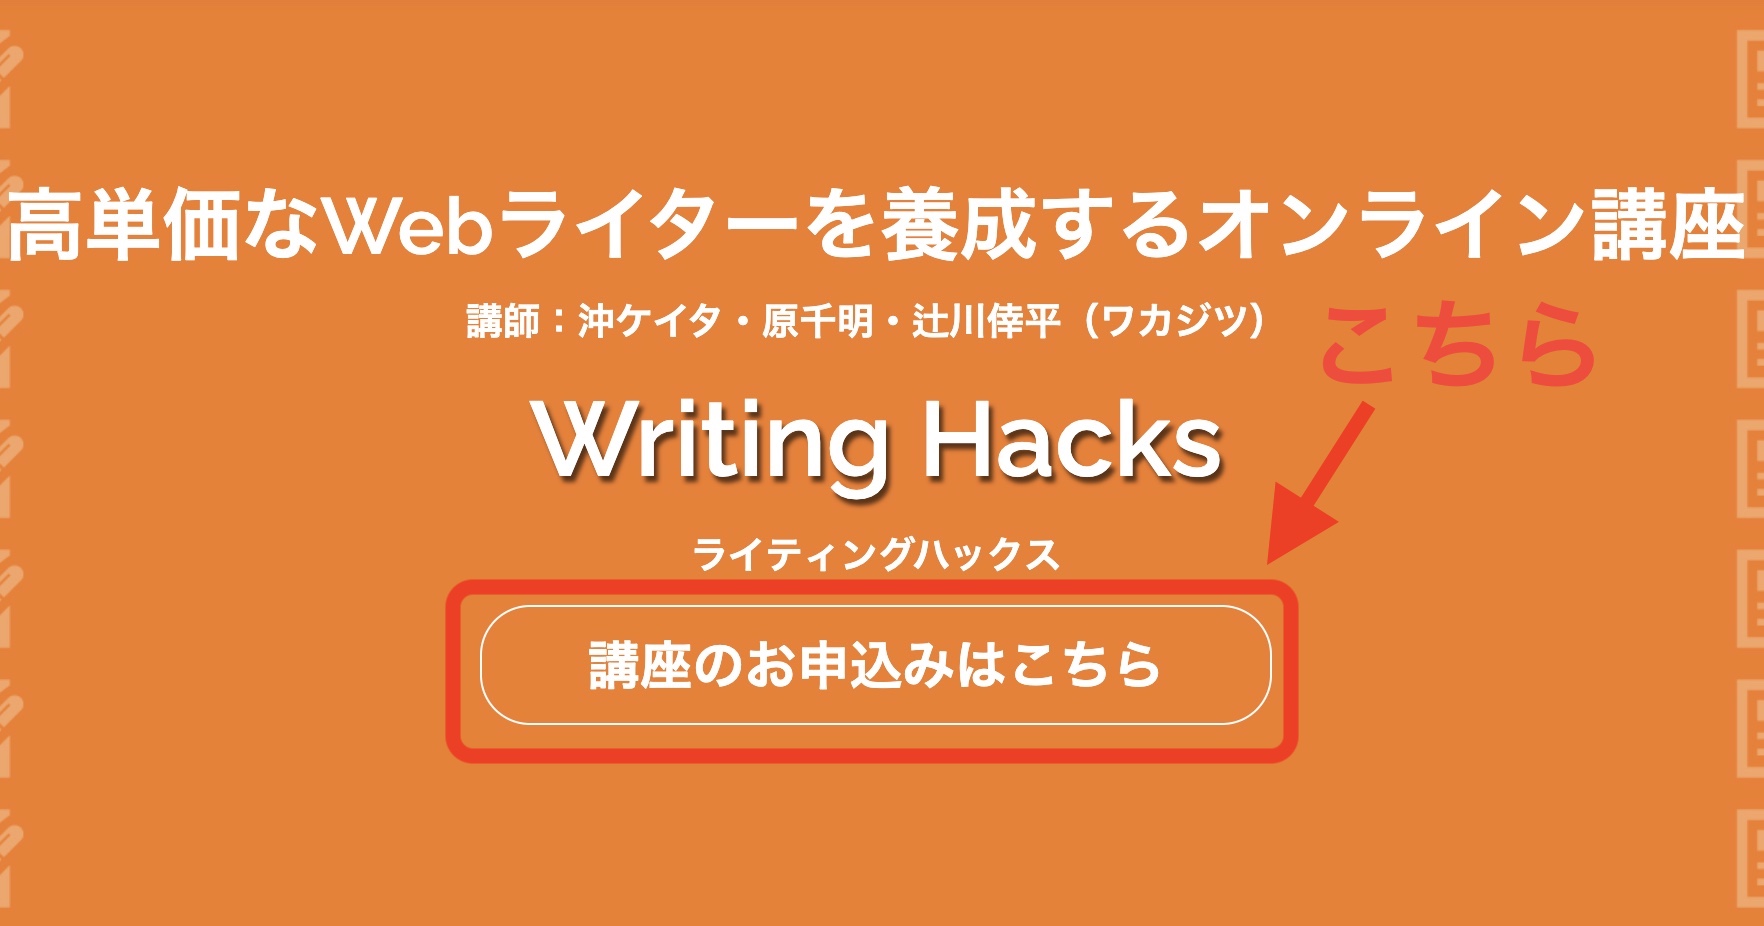 WritingHacksへの申し込み